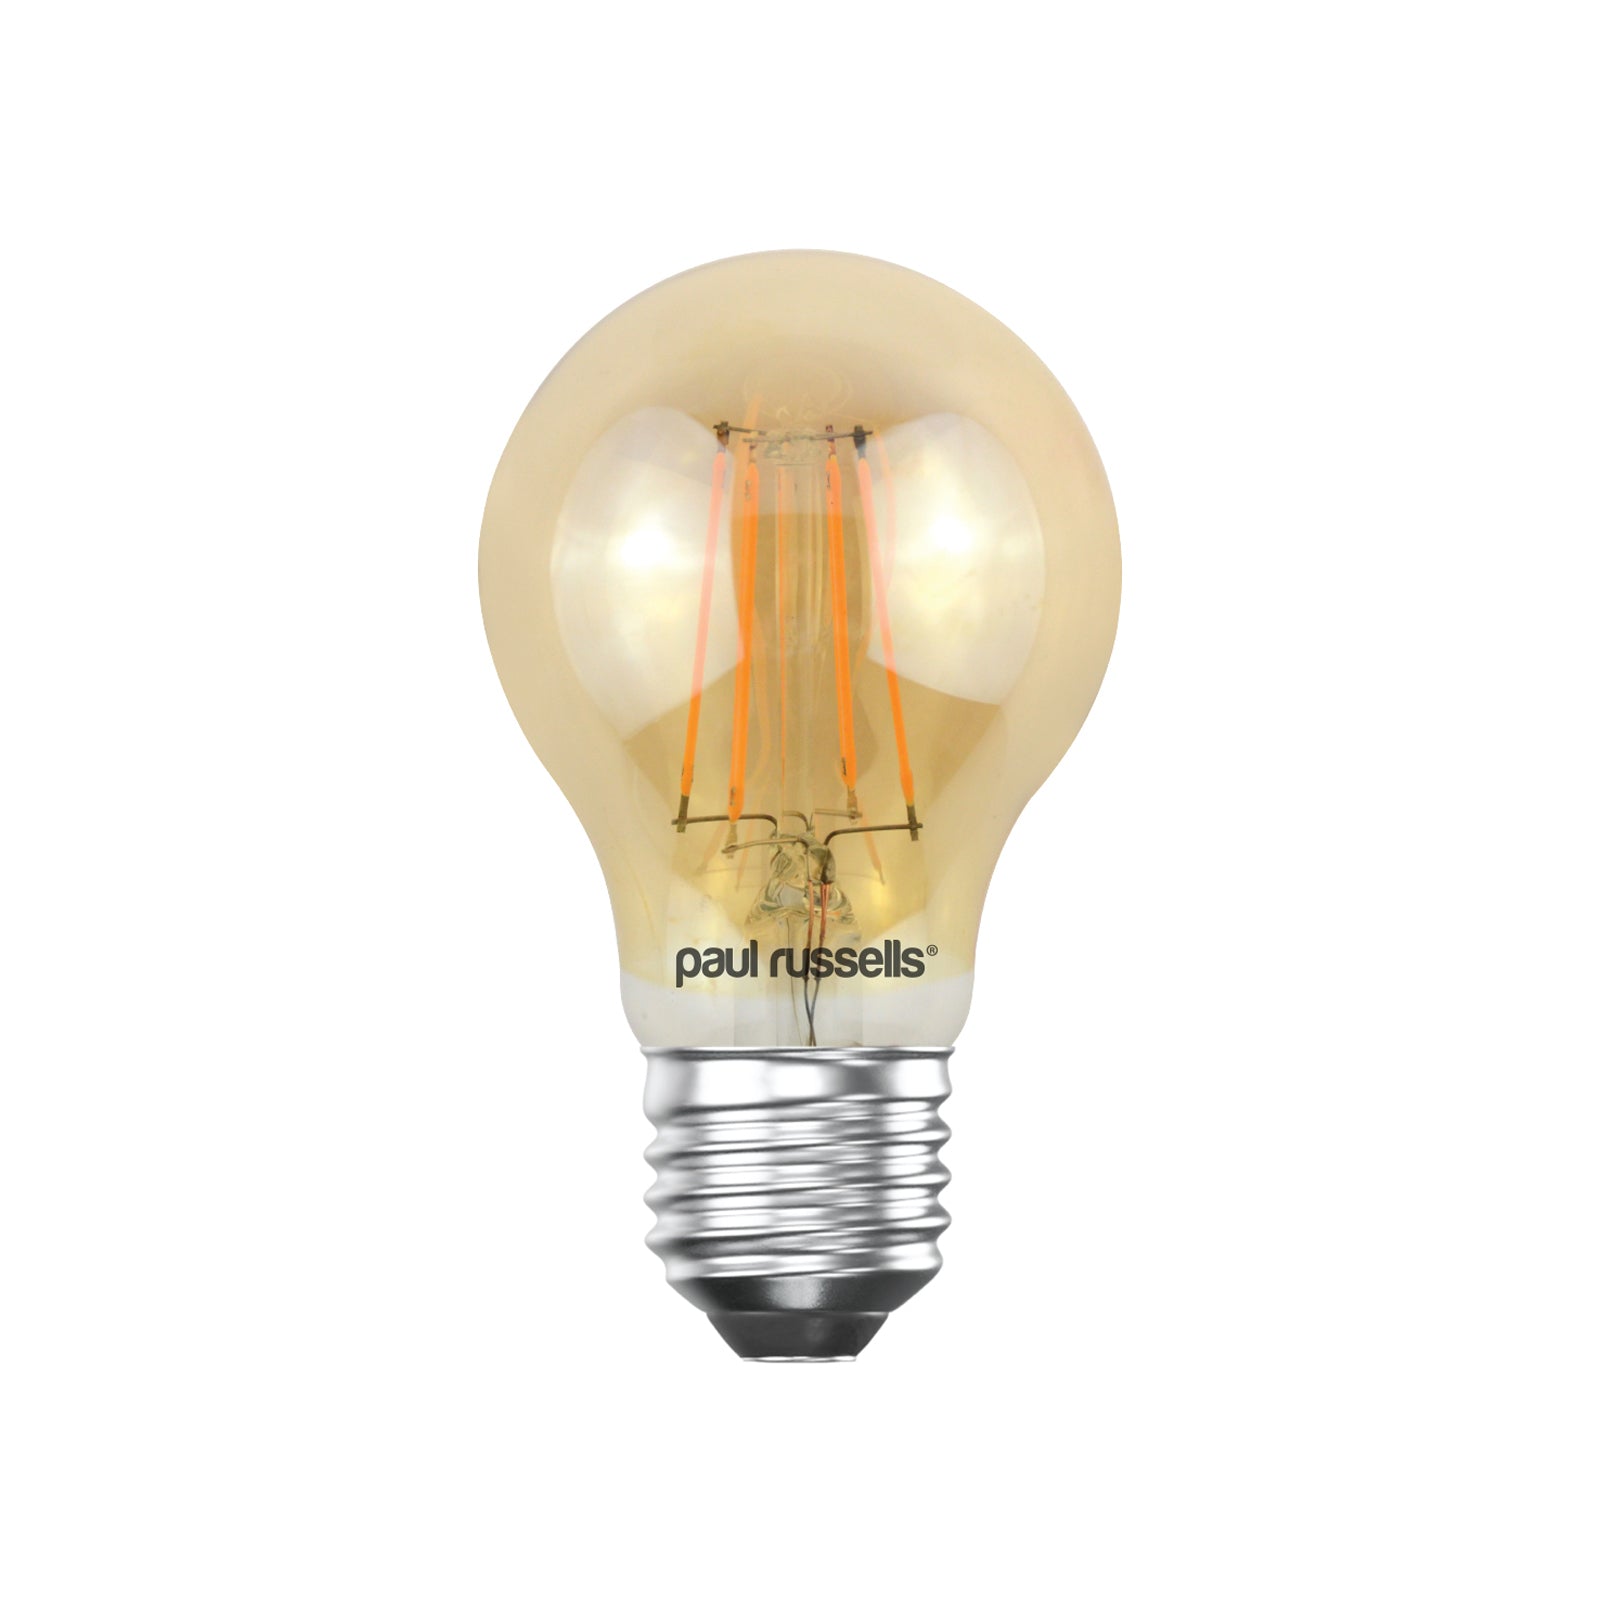 LED Filament GLS 4.5W (35w), ES/E27, 400 Lumens, Extra Warm White(2200K), 240V